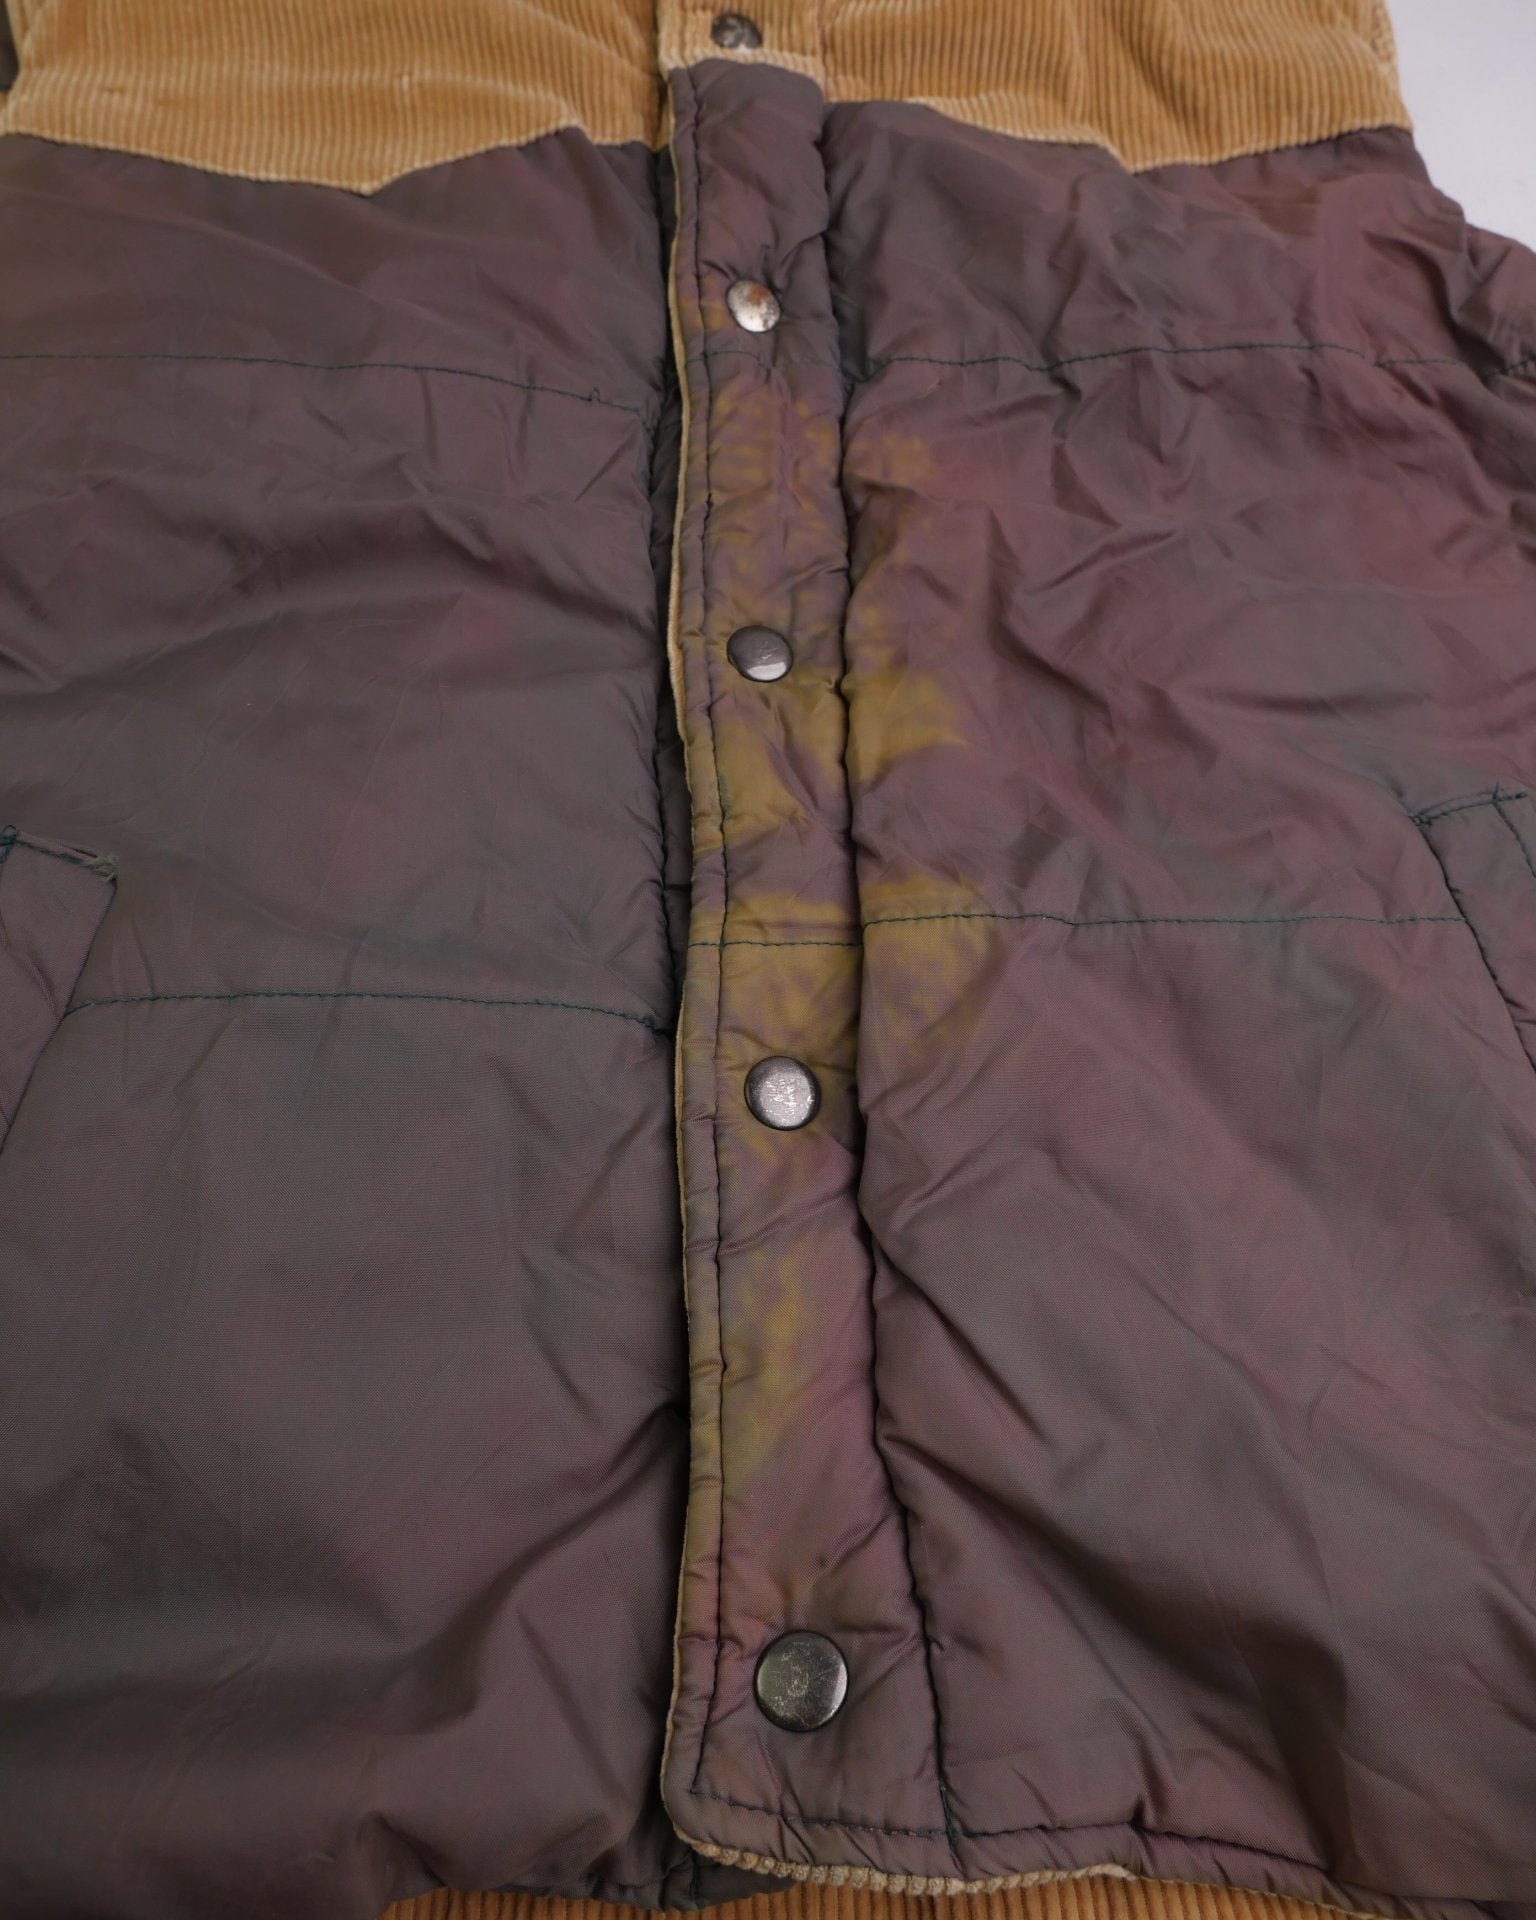 Two toned Corduroy Vintage Vest Jacke - Peeces